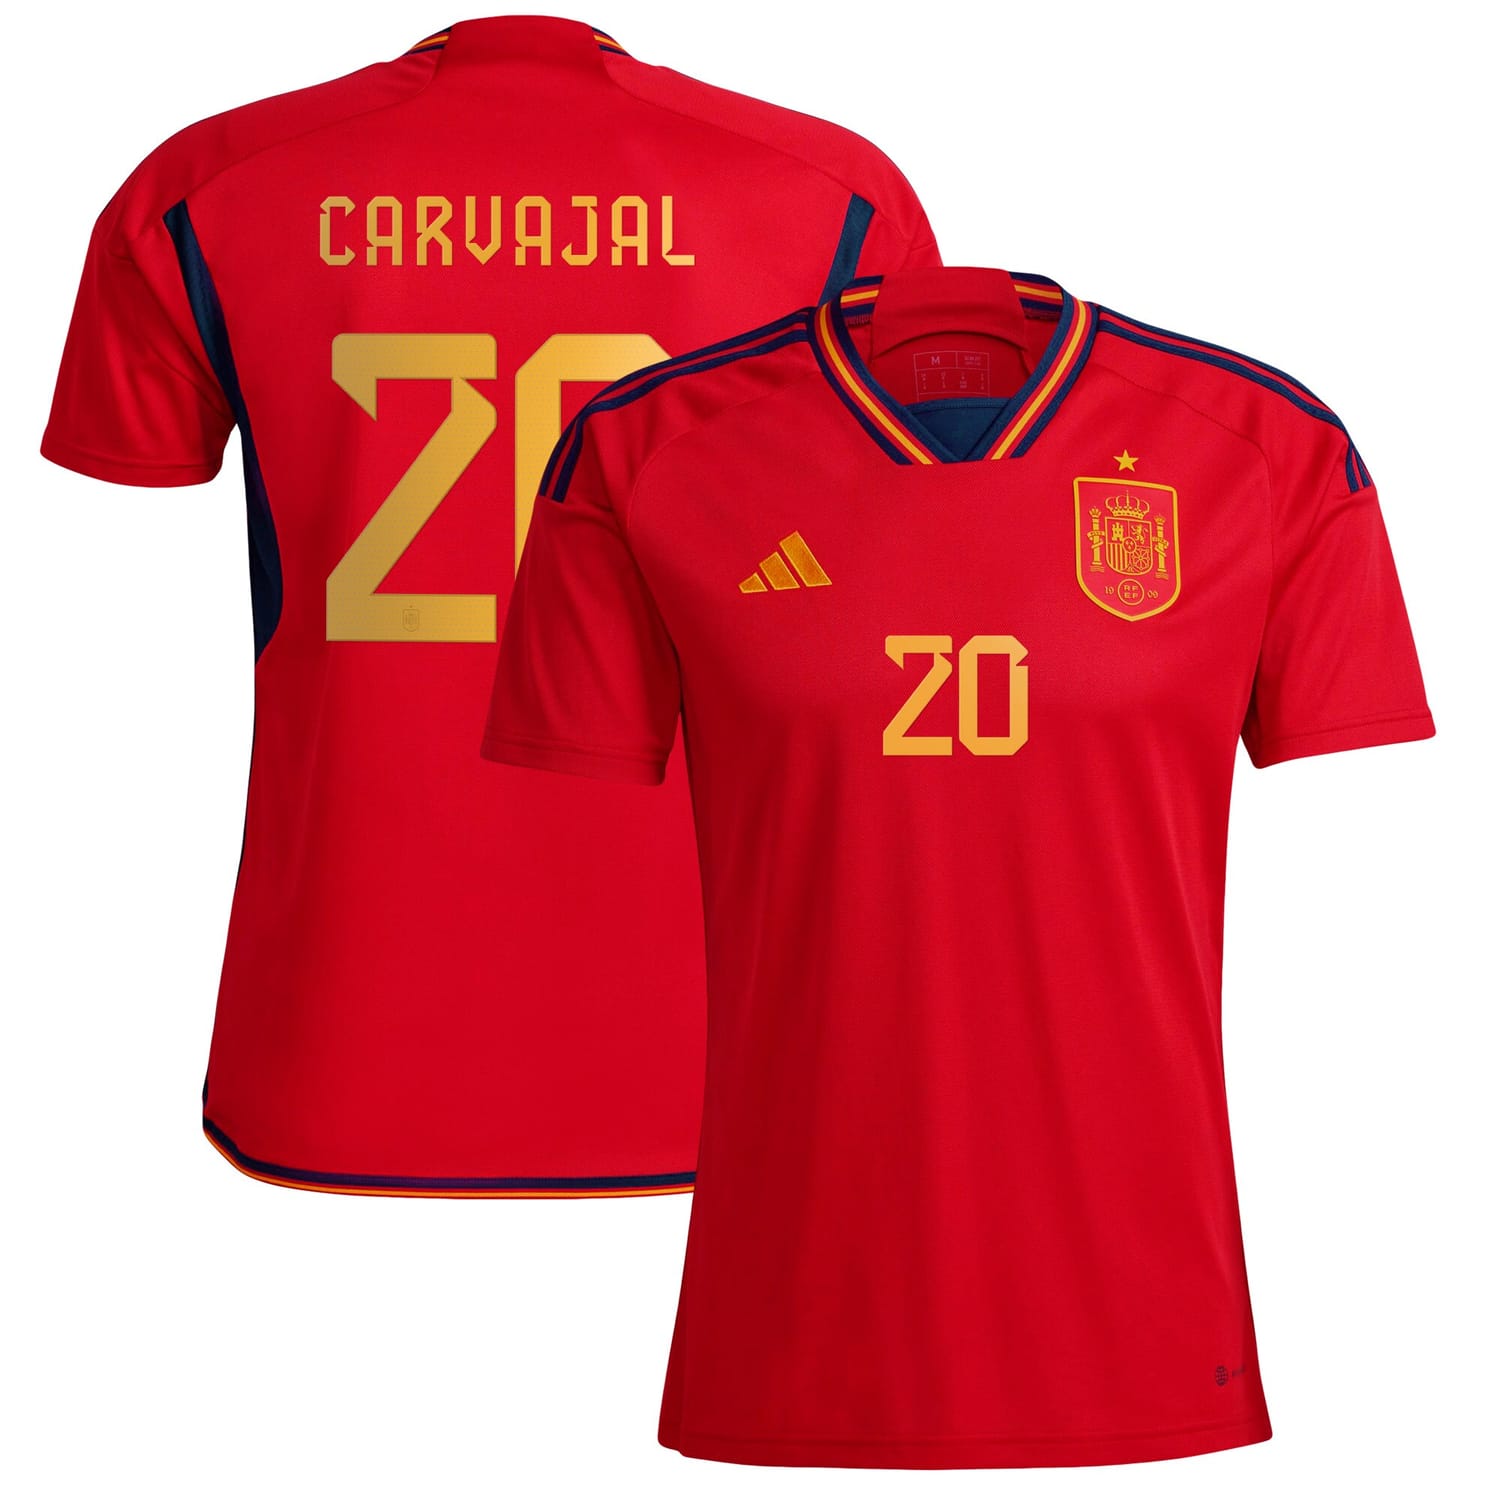 Spain National Team Home Jersey Shirt Red 2022-23 player Daniel Carvajal printing for Men